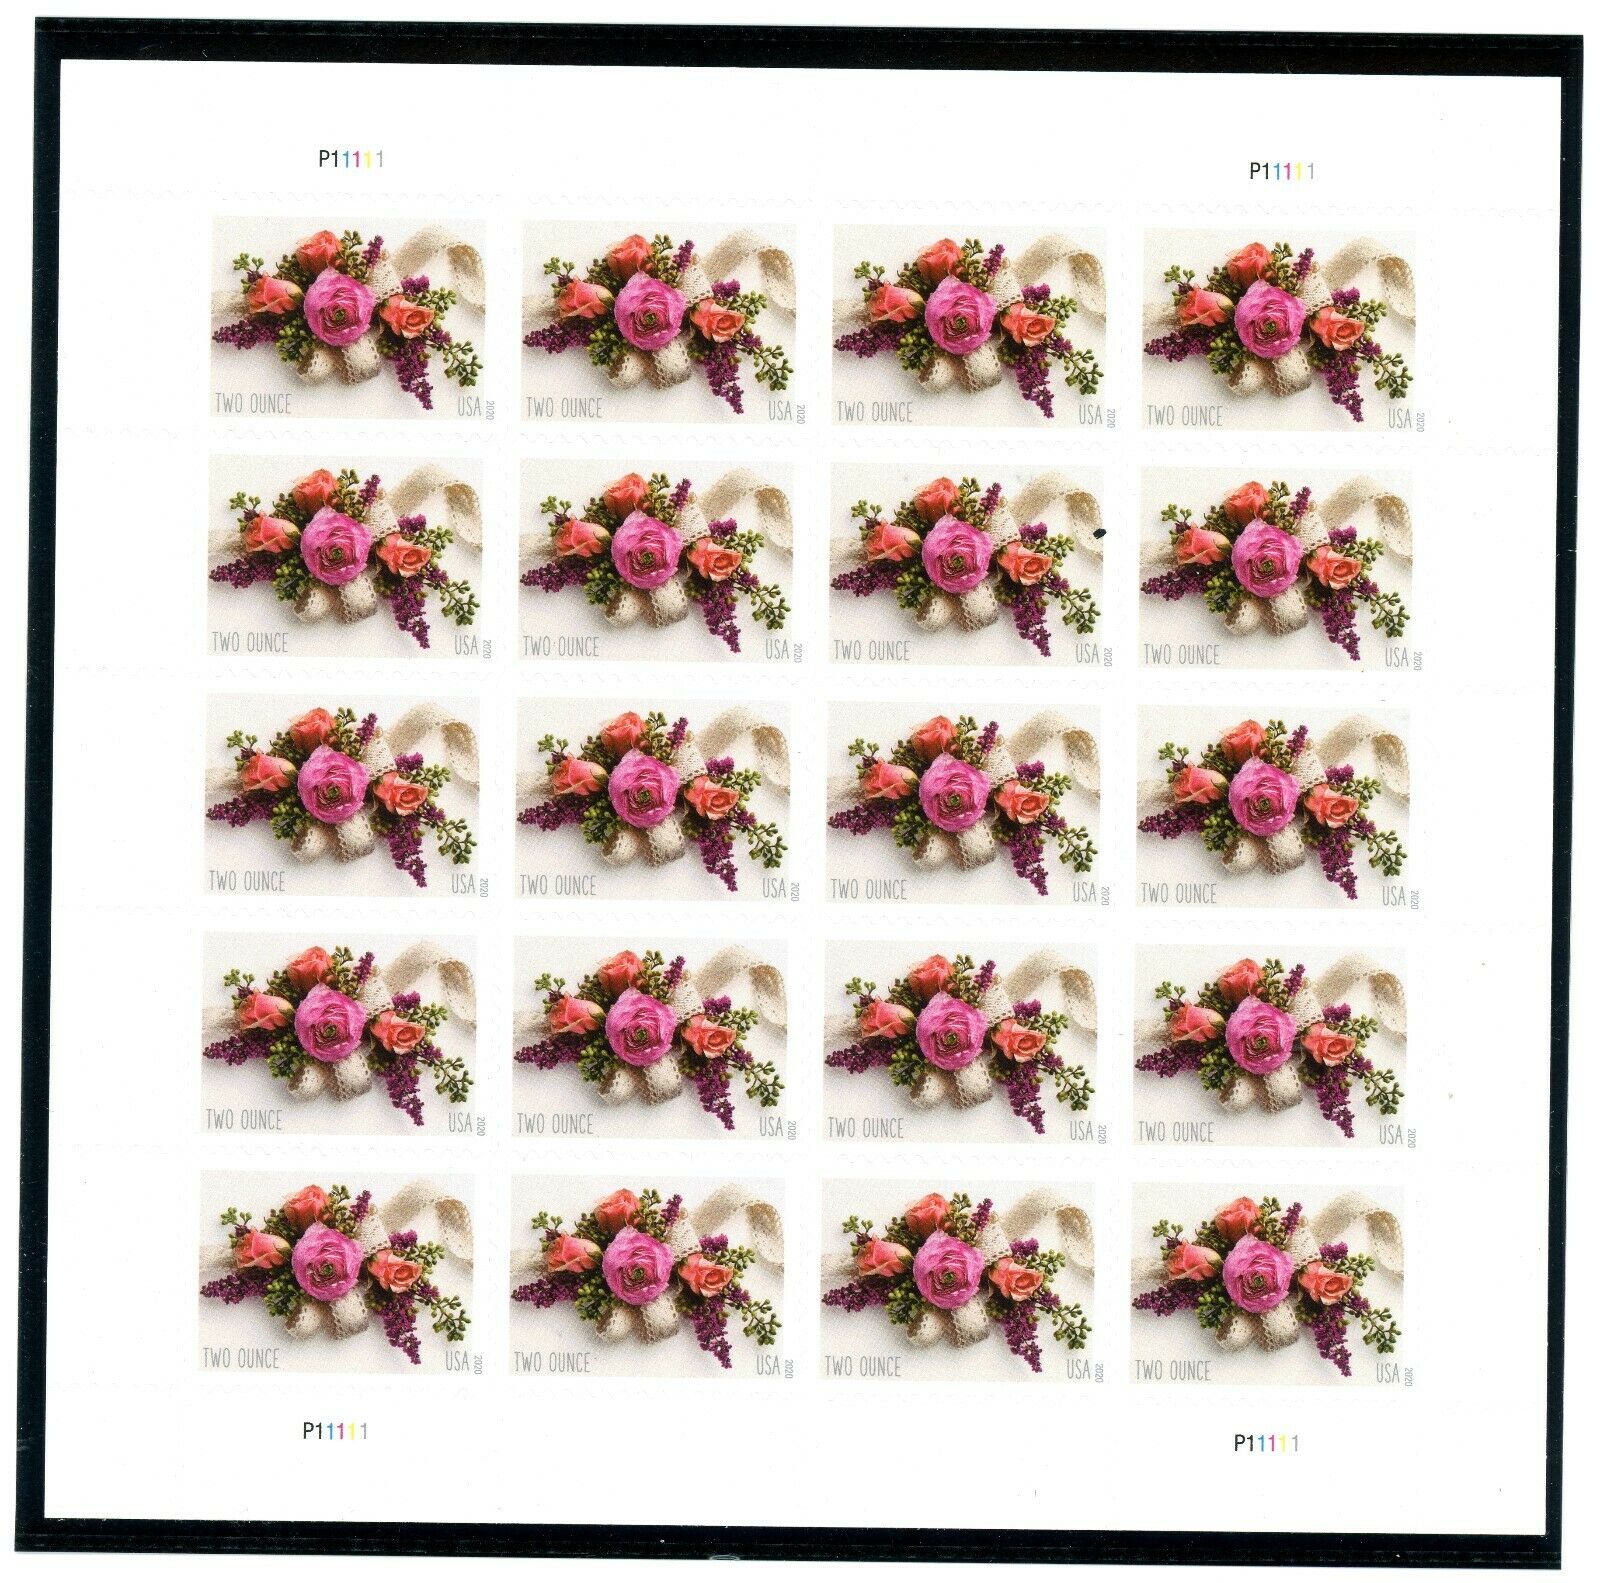 5458 Forever (2 ounce) Garden Corsage Mint Sheet of 20 #5458sh